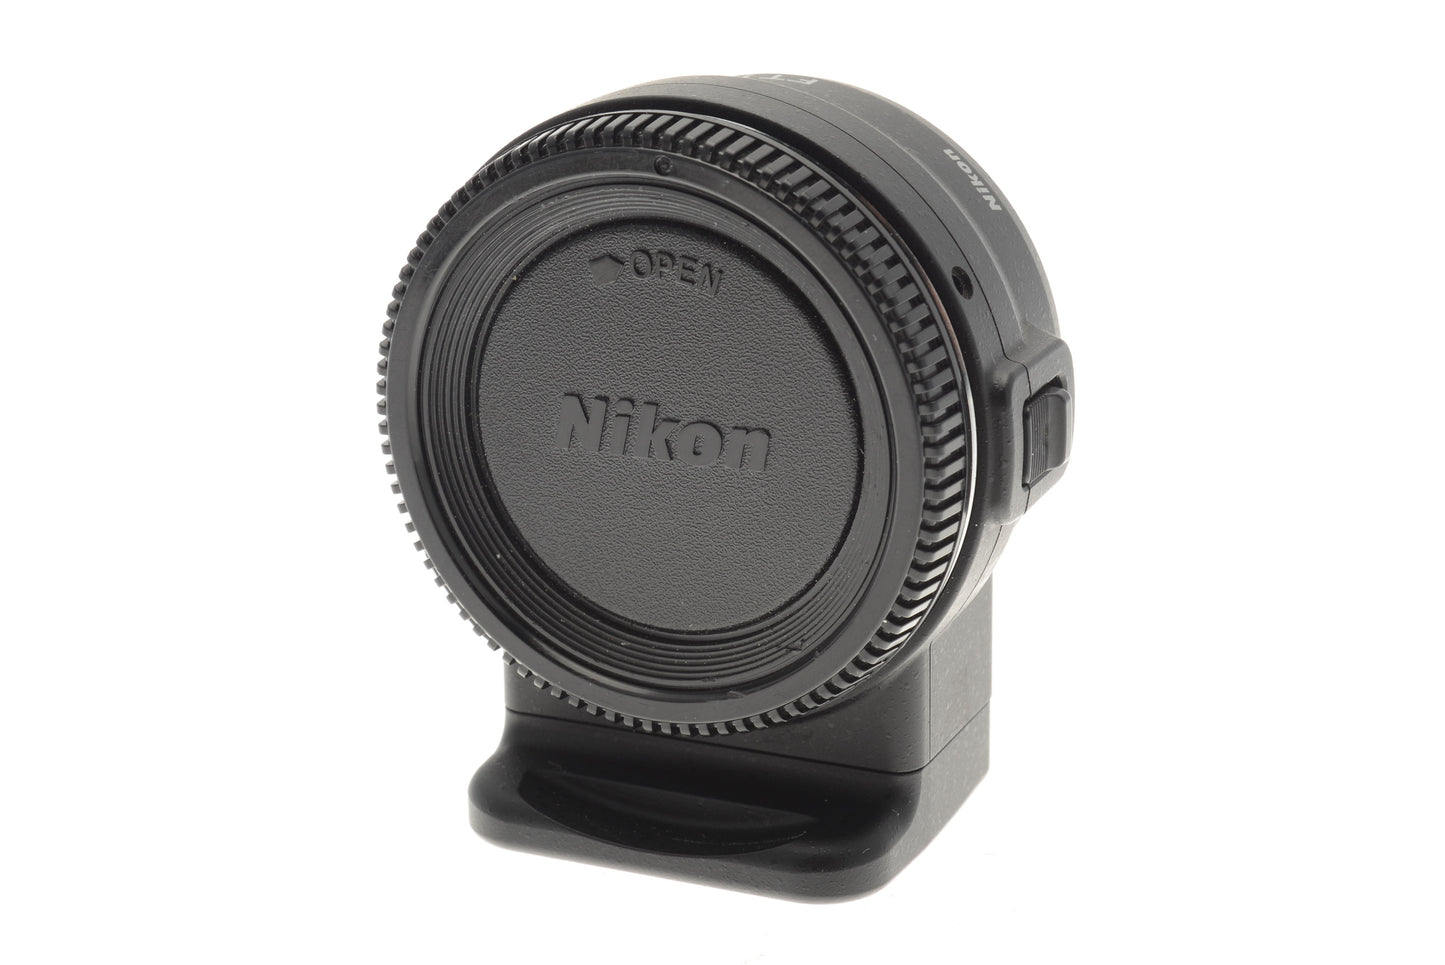 Nikon F - 1 Mount Adapter FT1 - Lens Adapter